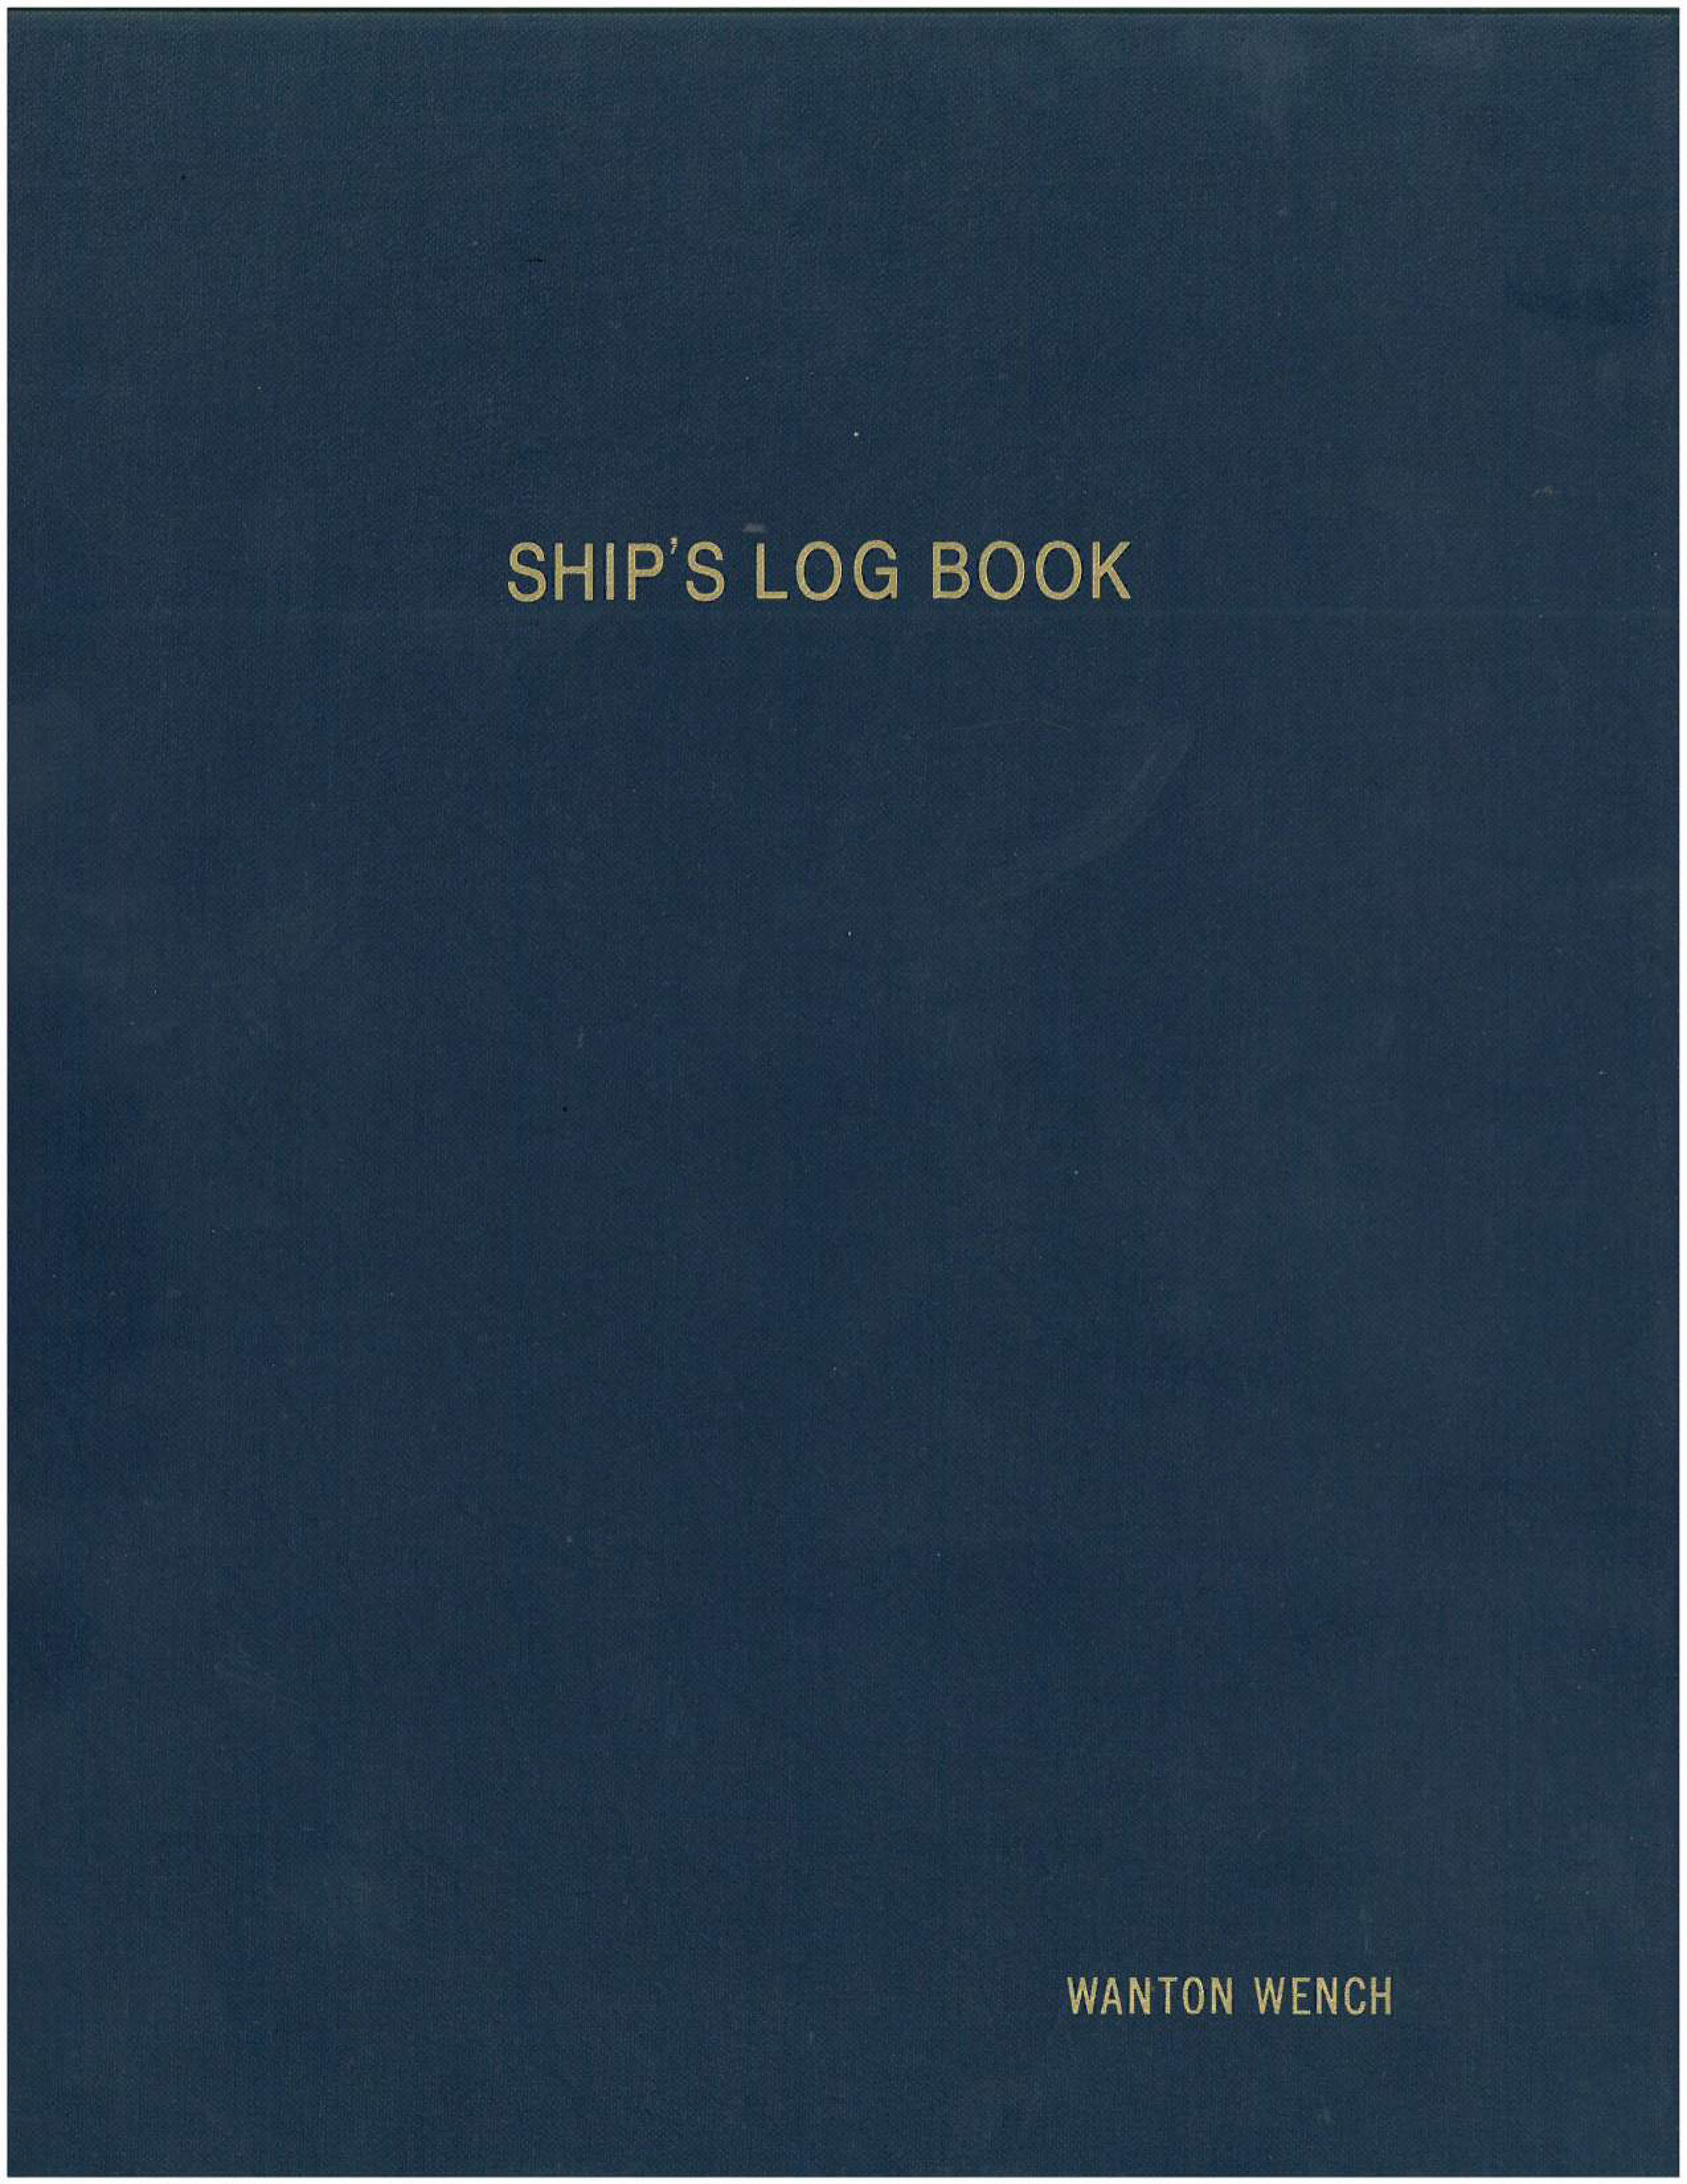 Ships Log Wanton Wench Page 01.jpg